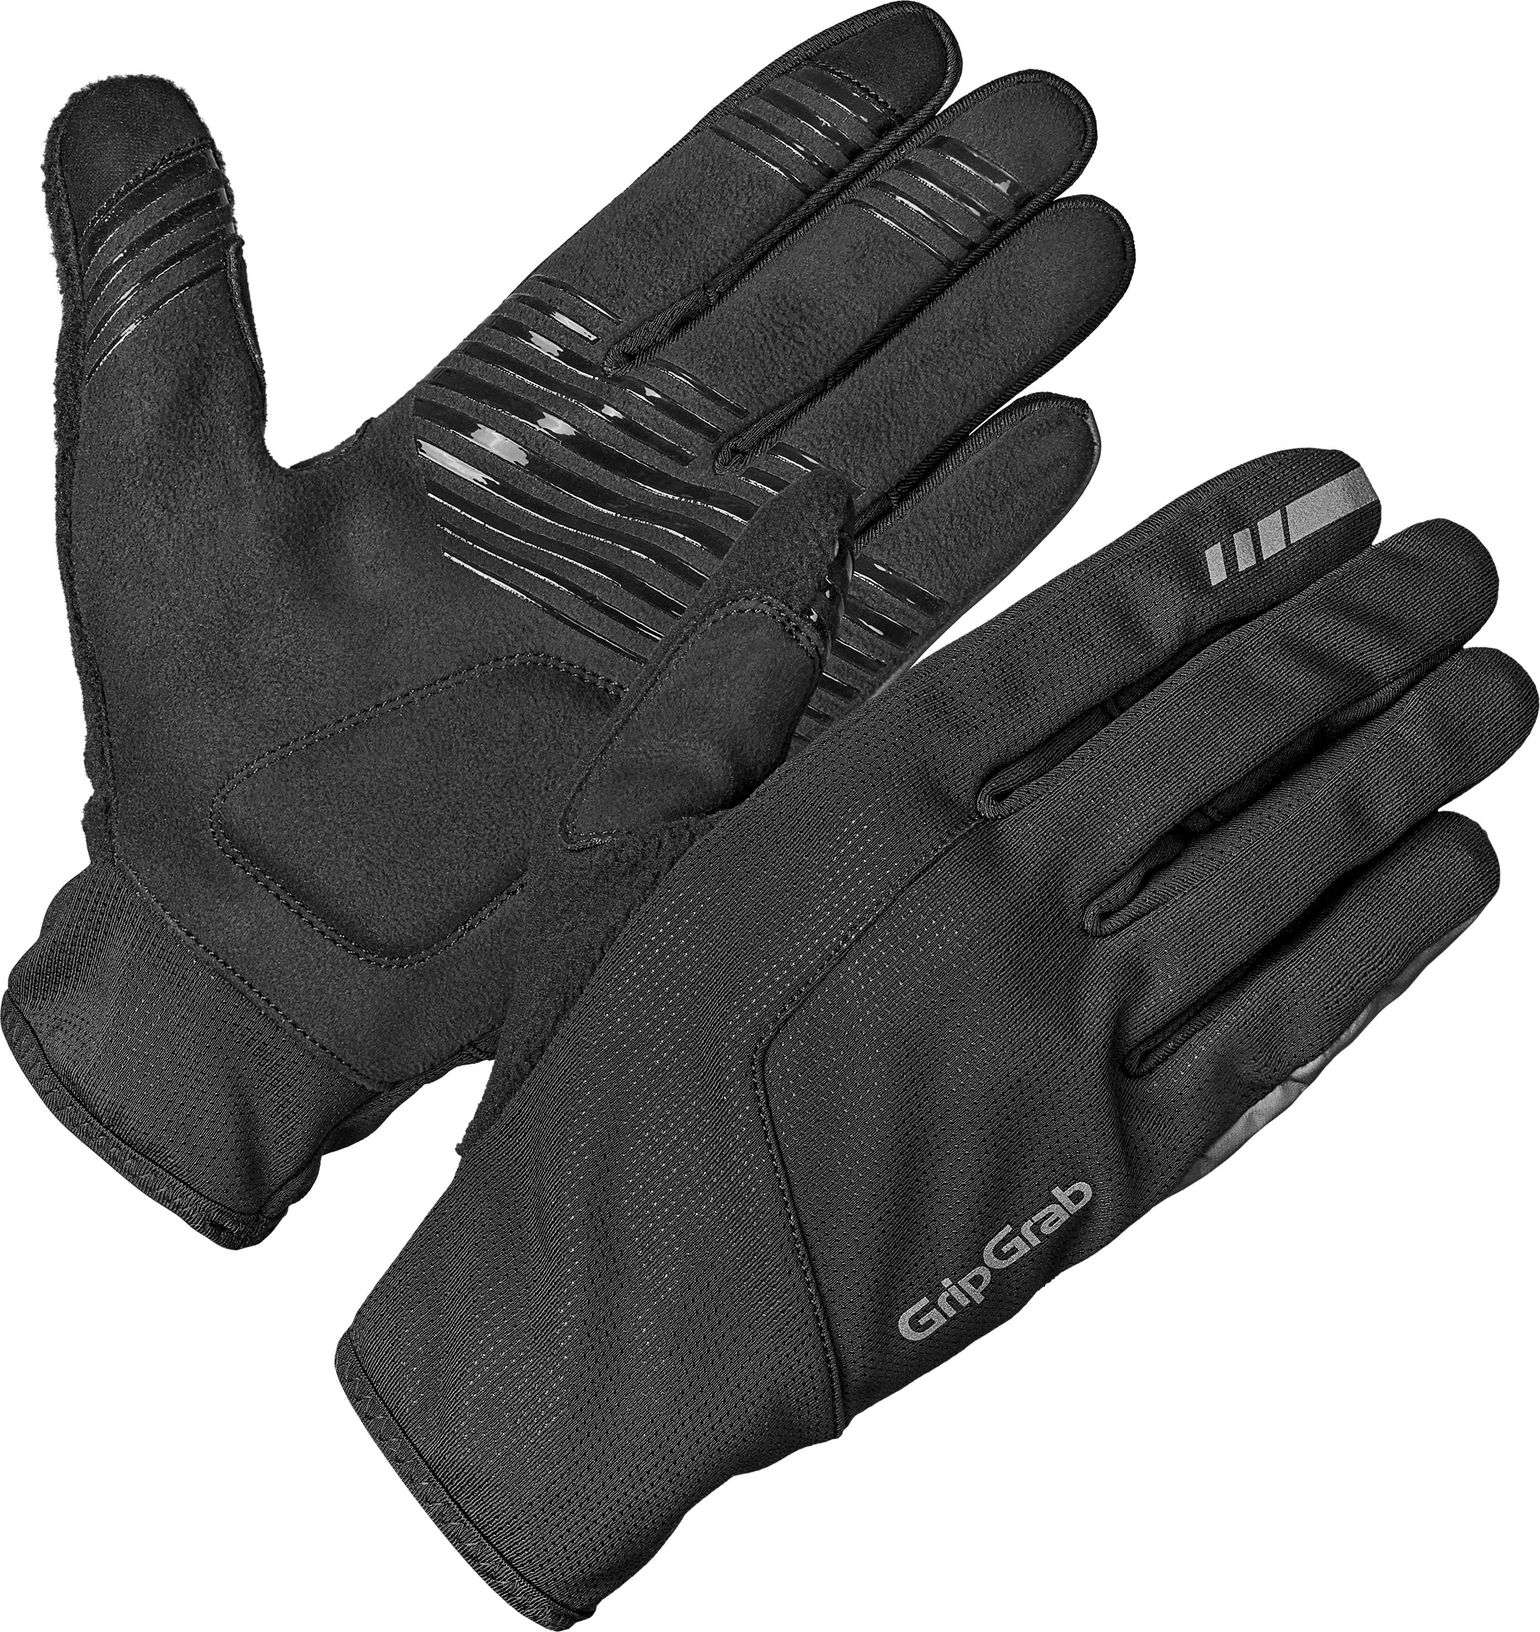 Hurricane 2 Windproof Spring-Autumn Gloves Black